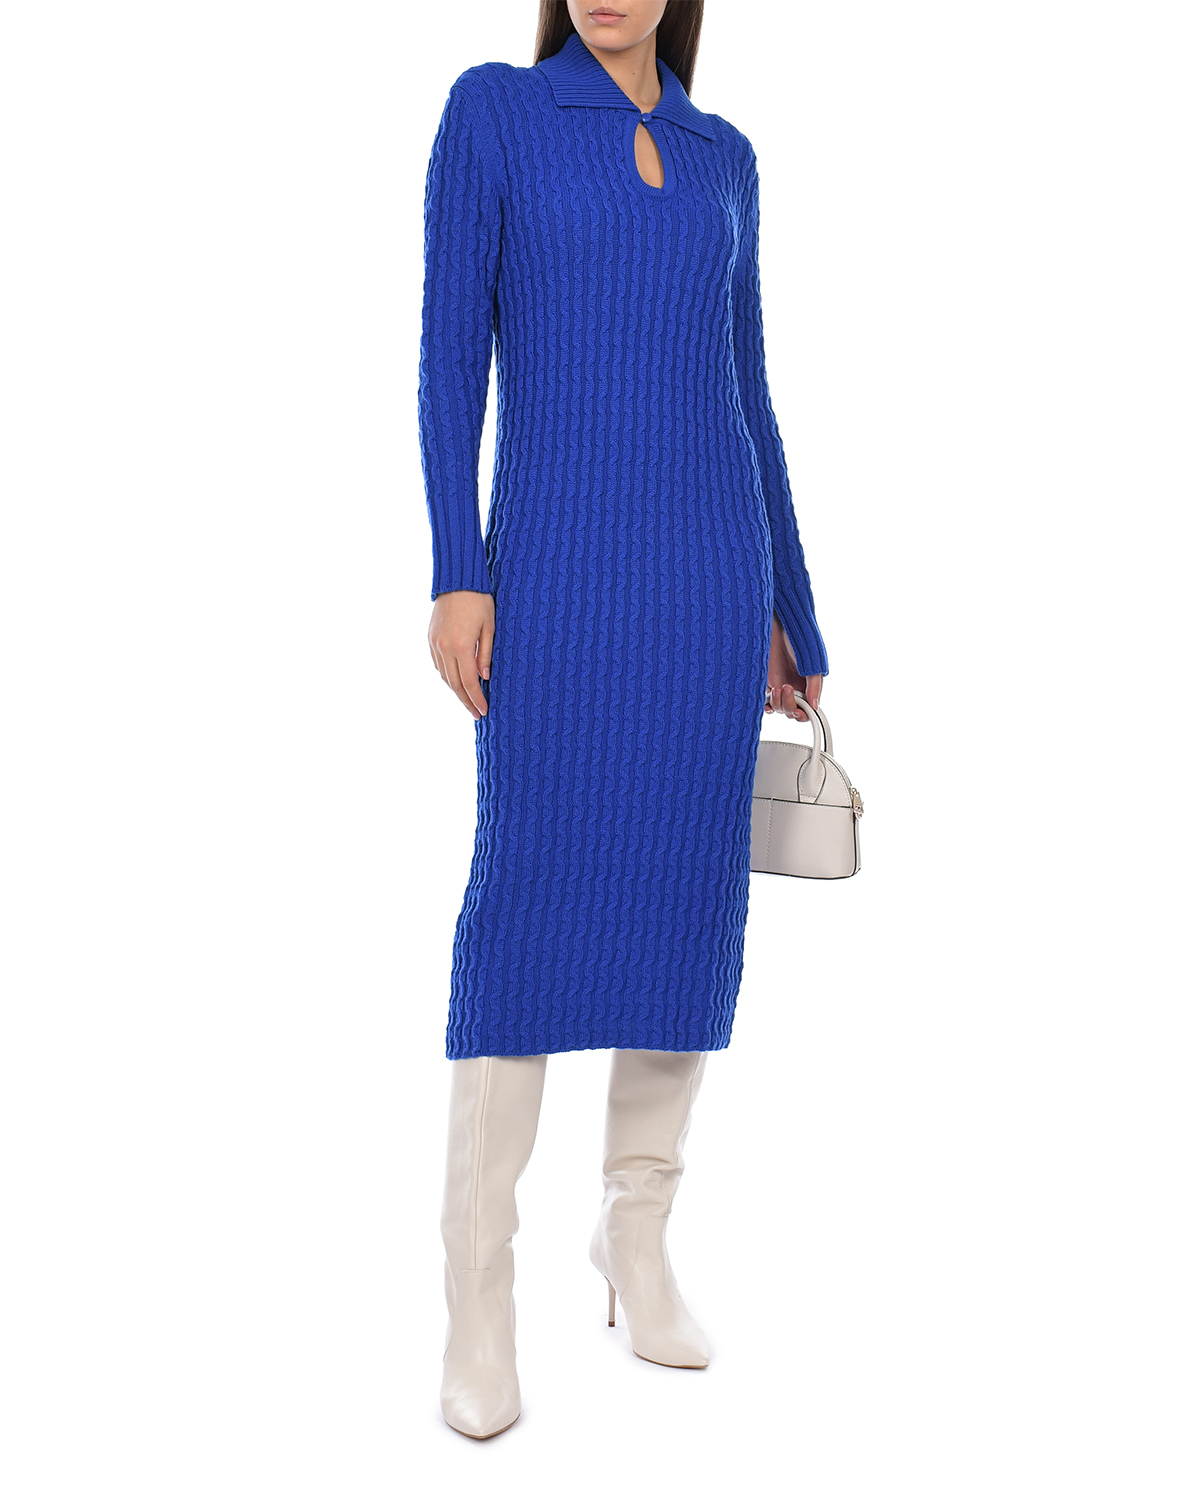 Ярко-синее платье из трикотажа Vivetta, размер 42, цвет нет цвета - фото 2